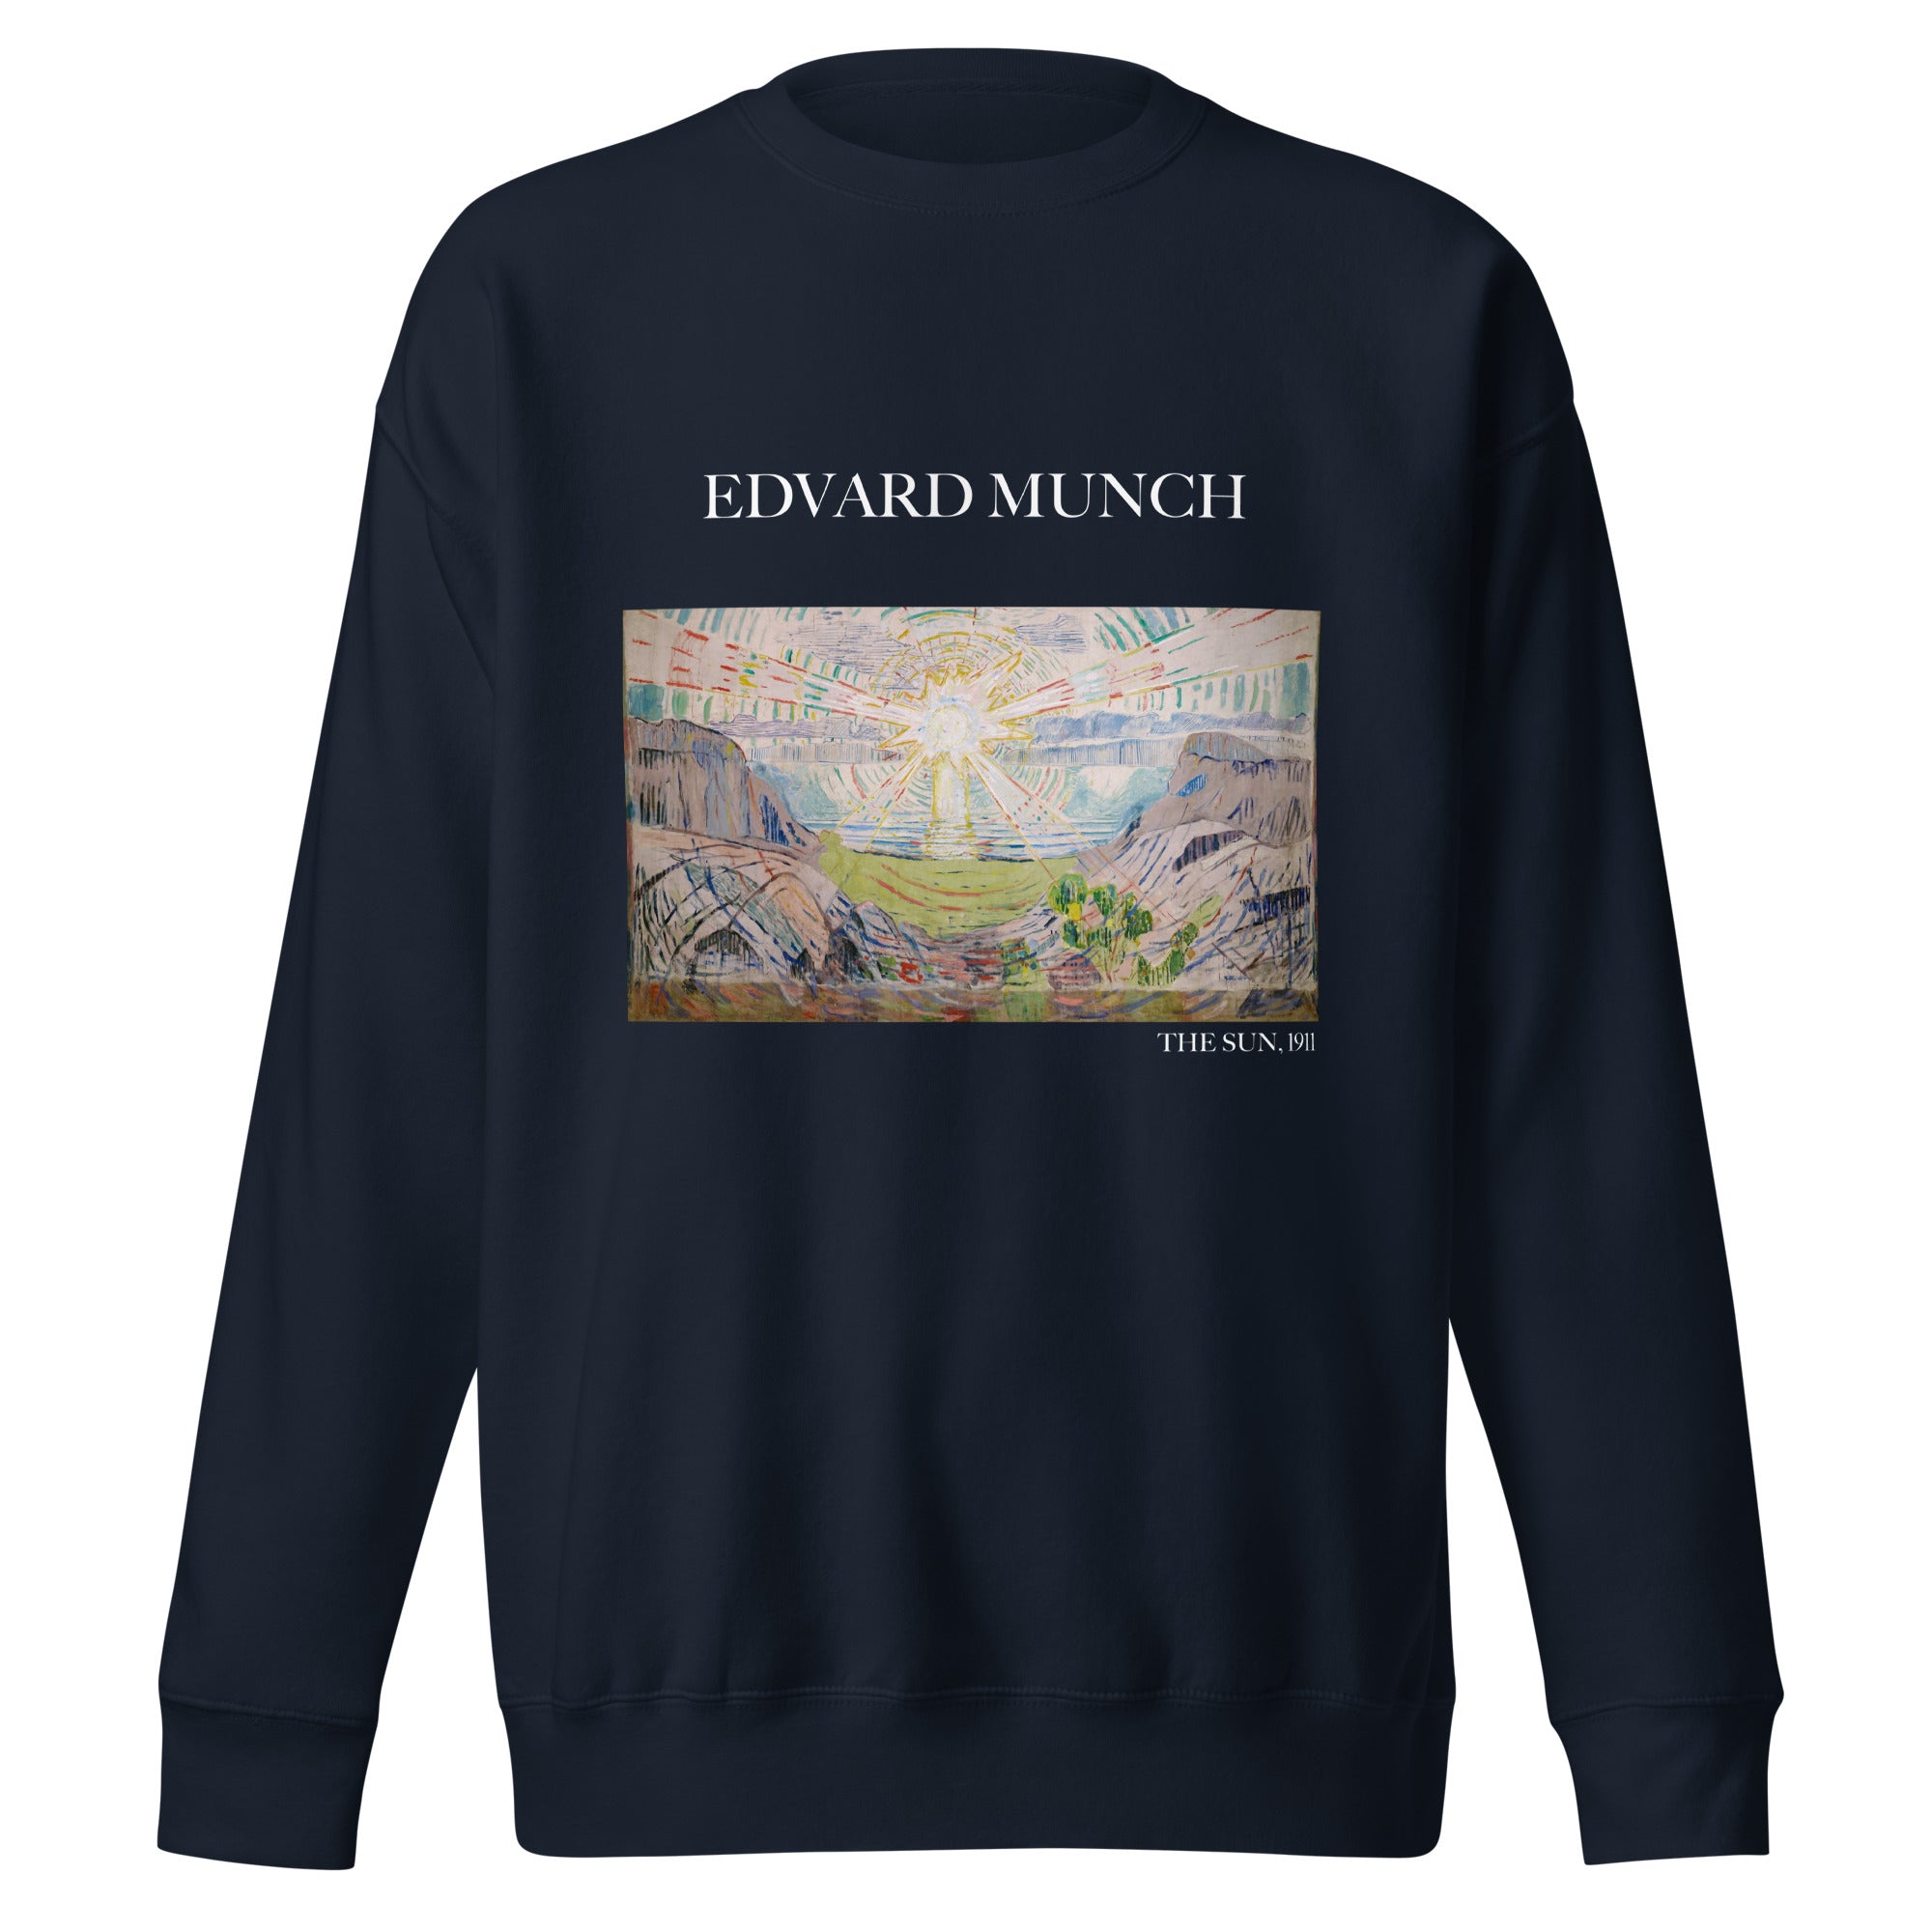 Edvard Munch 'The Sun' Famous Painting Sweatshirt | Unisex Premium Sweatshirt